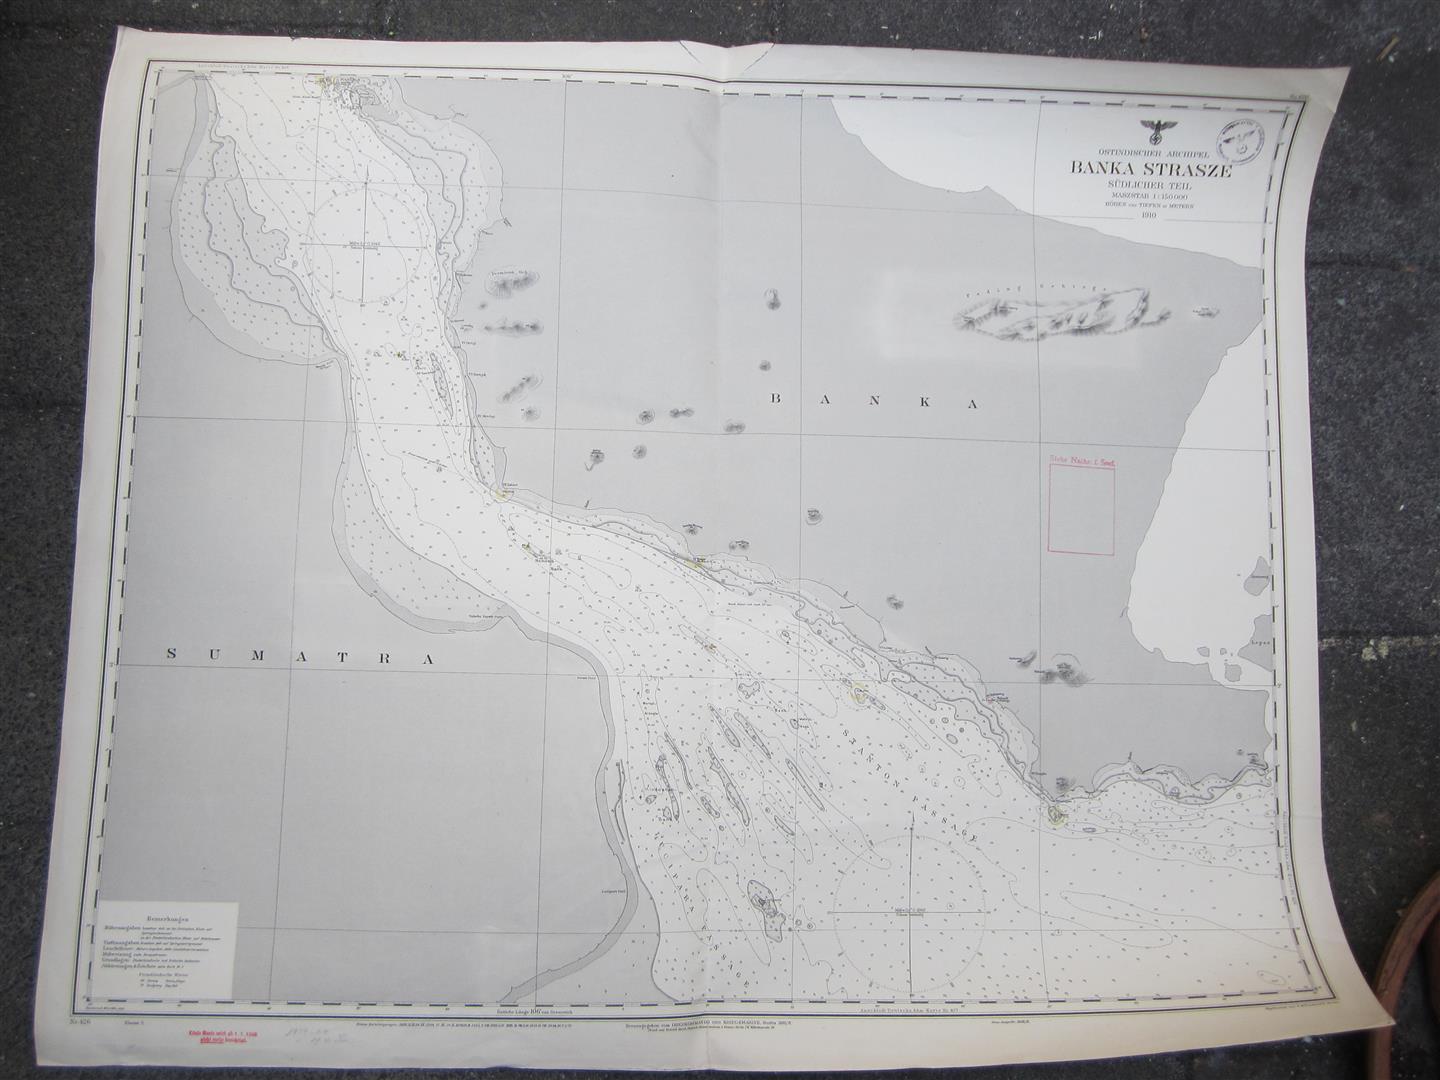 WW2 KM Sea Chart BANKA STRASZE, East Indies